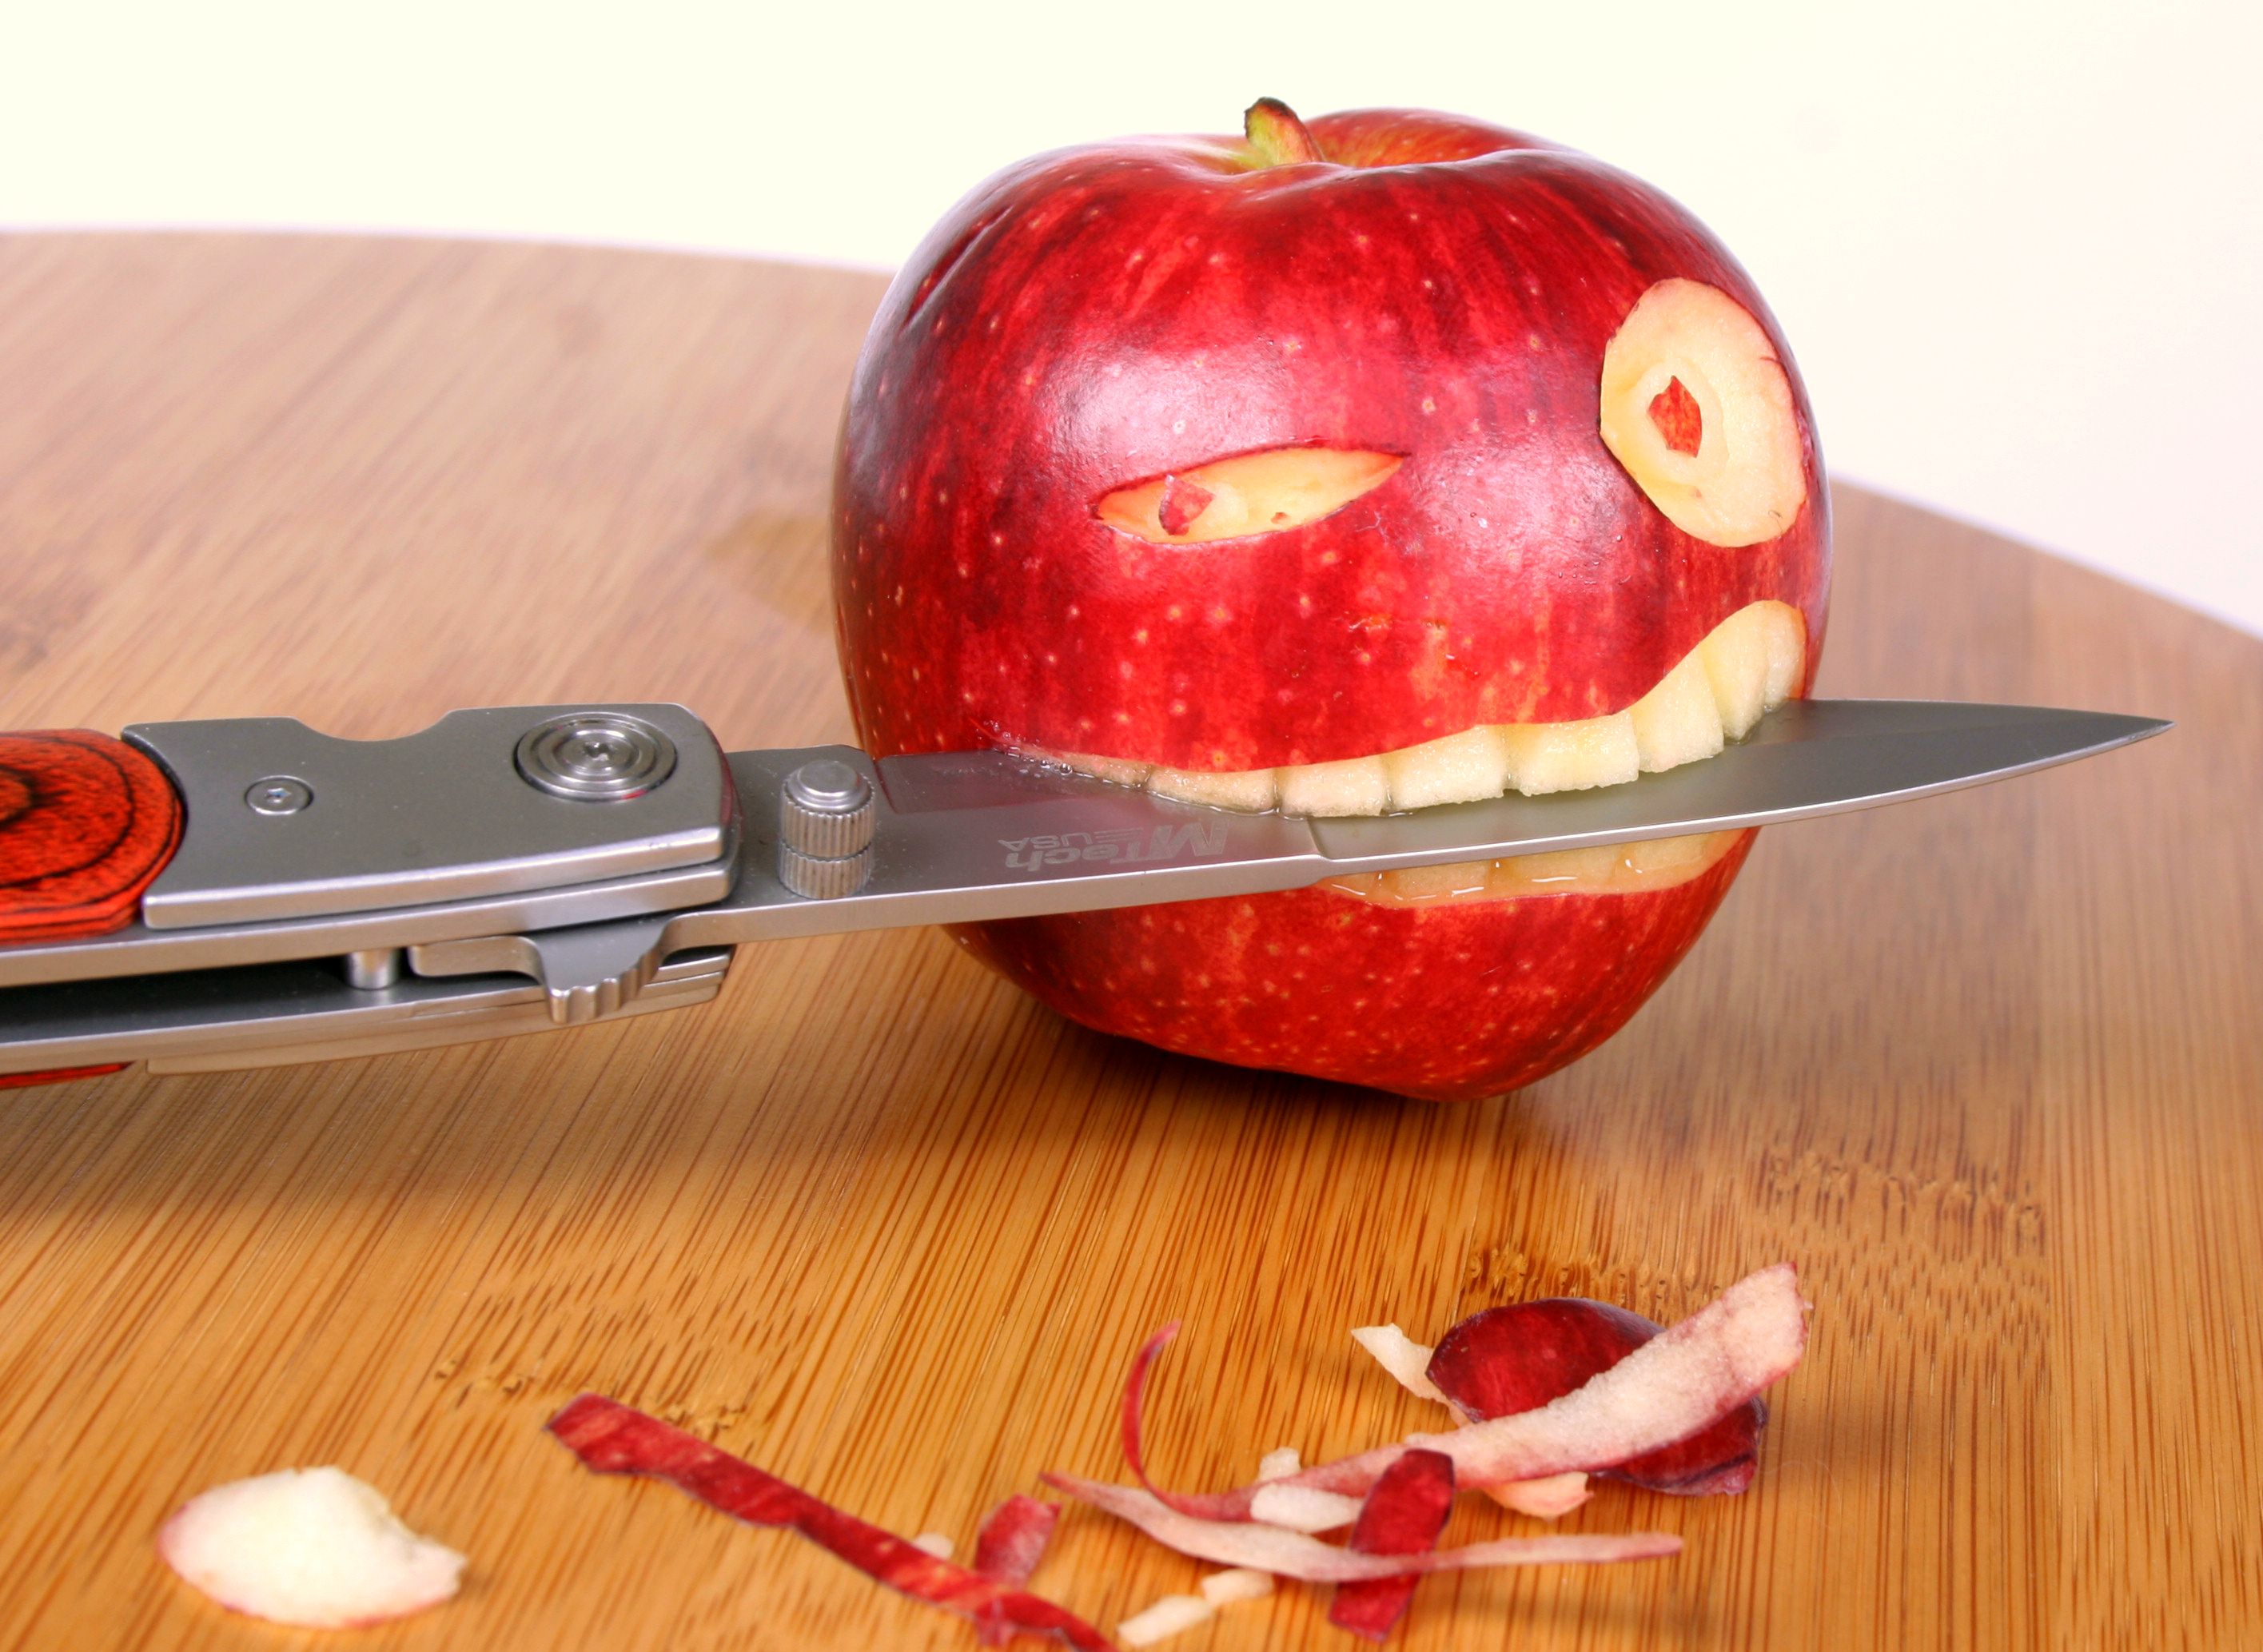 245519 descargar imagen alimento, manzana, cuchillo, frutas: fondos de pantalla y protectores de pantalla gratis